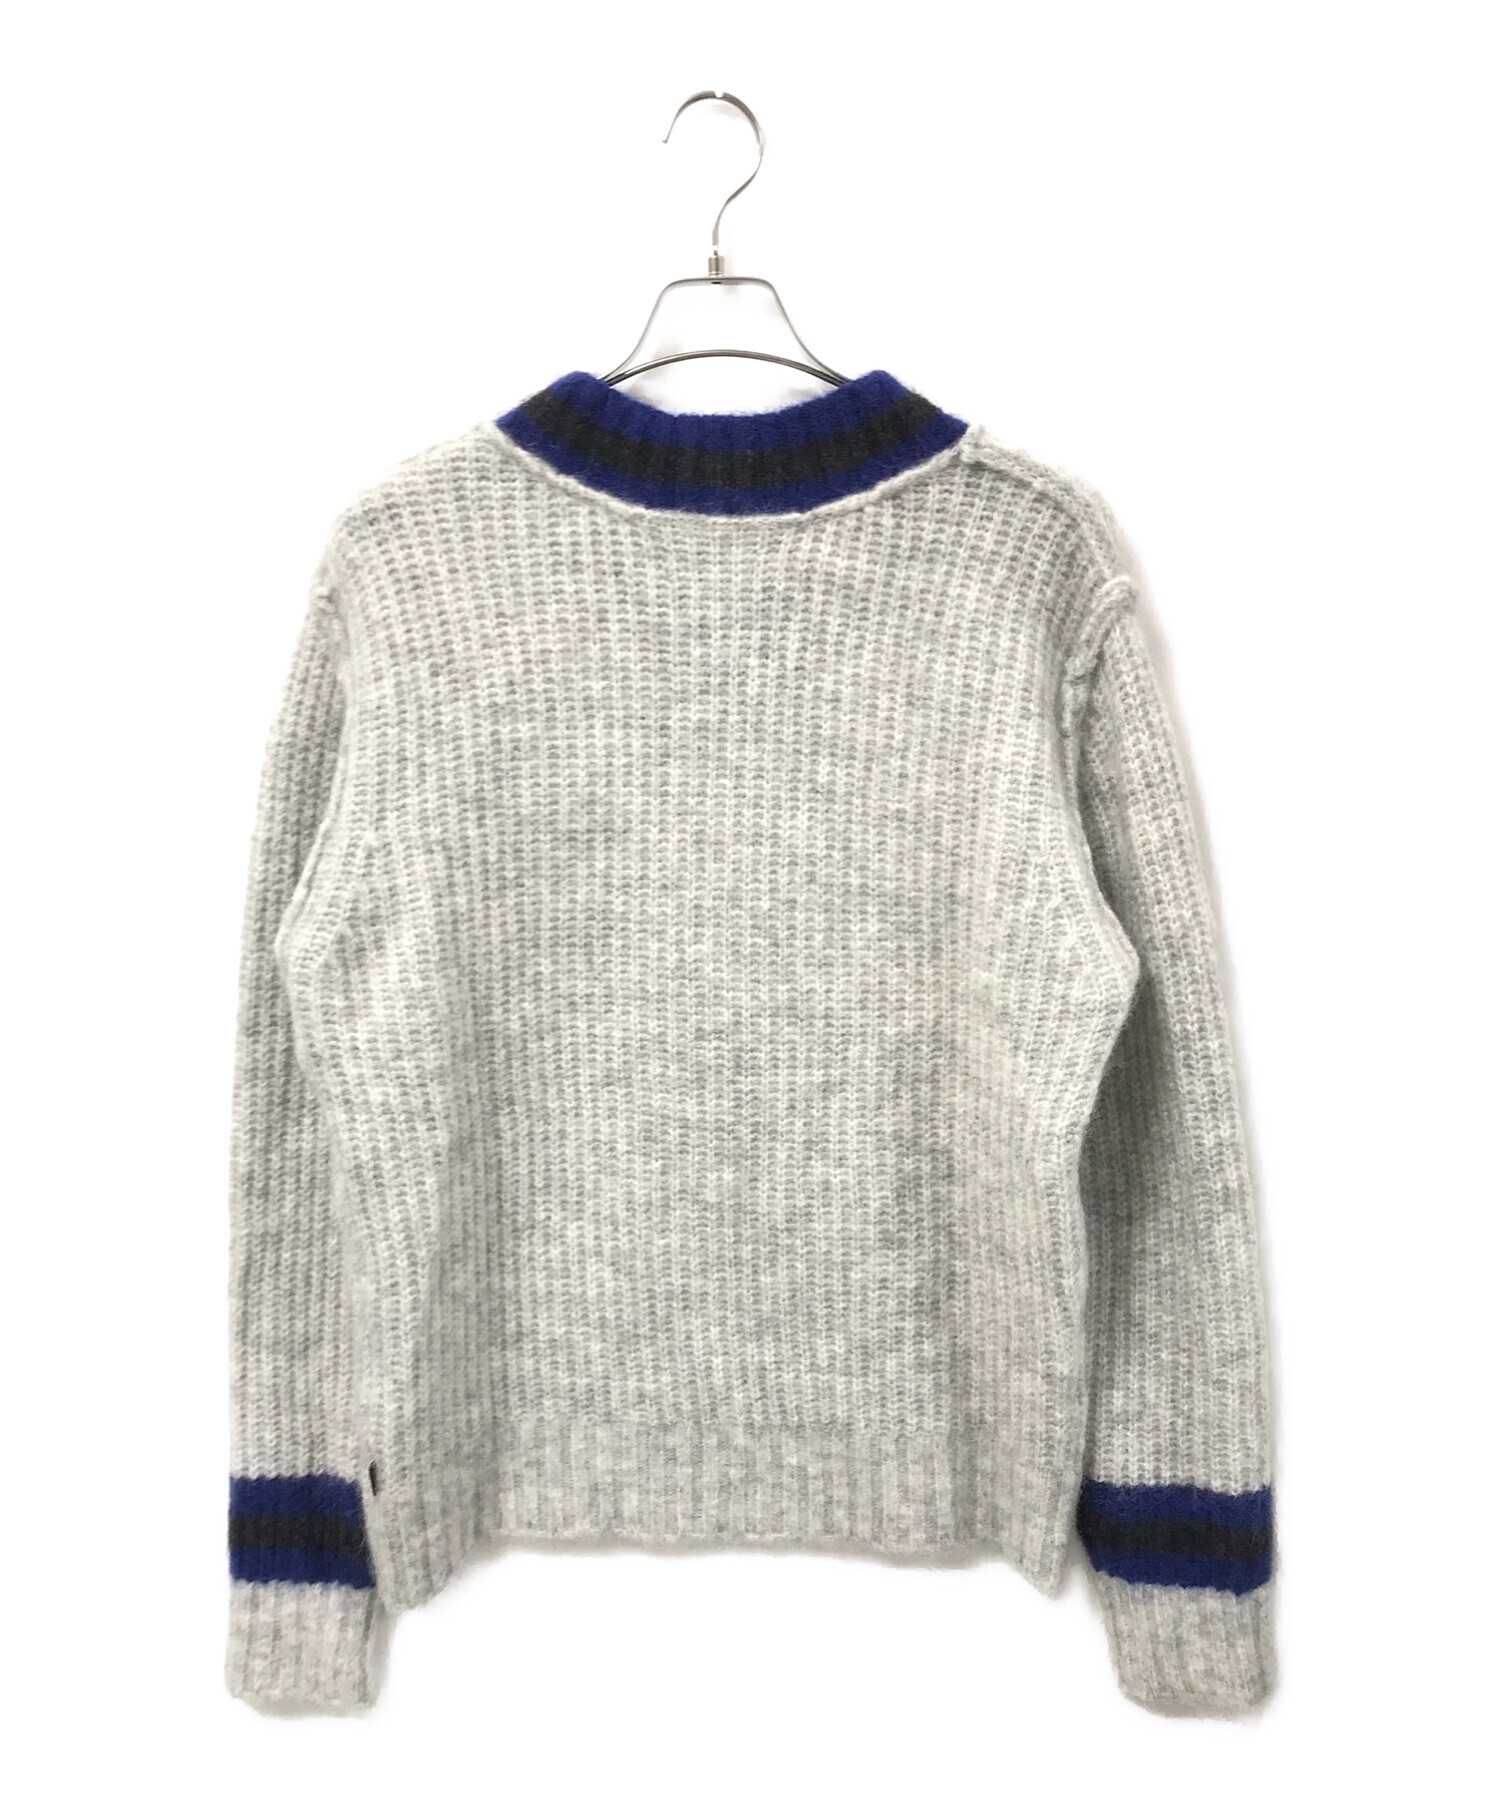 STUSSY モヘアニット Vネック mohair tennis sweater - ニット/セーター